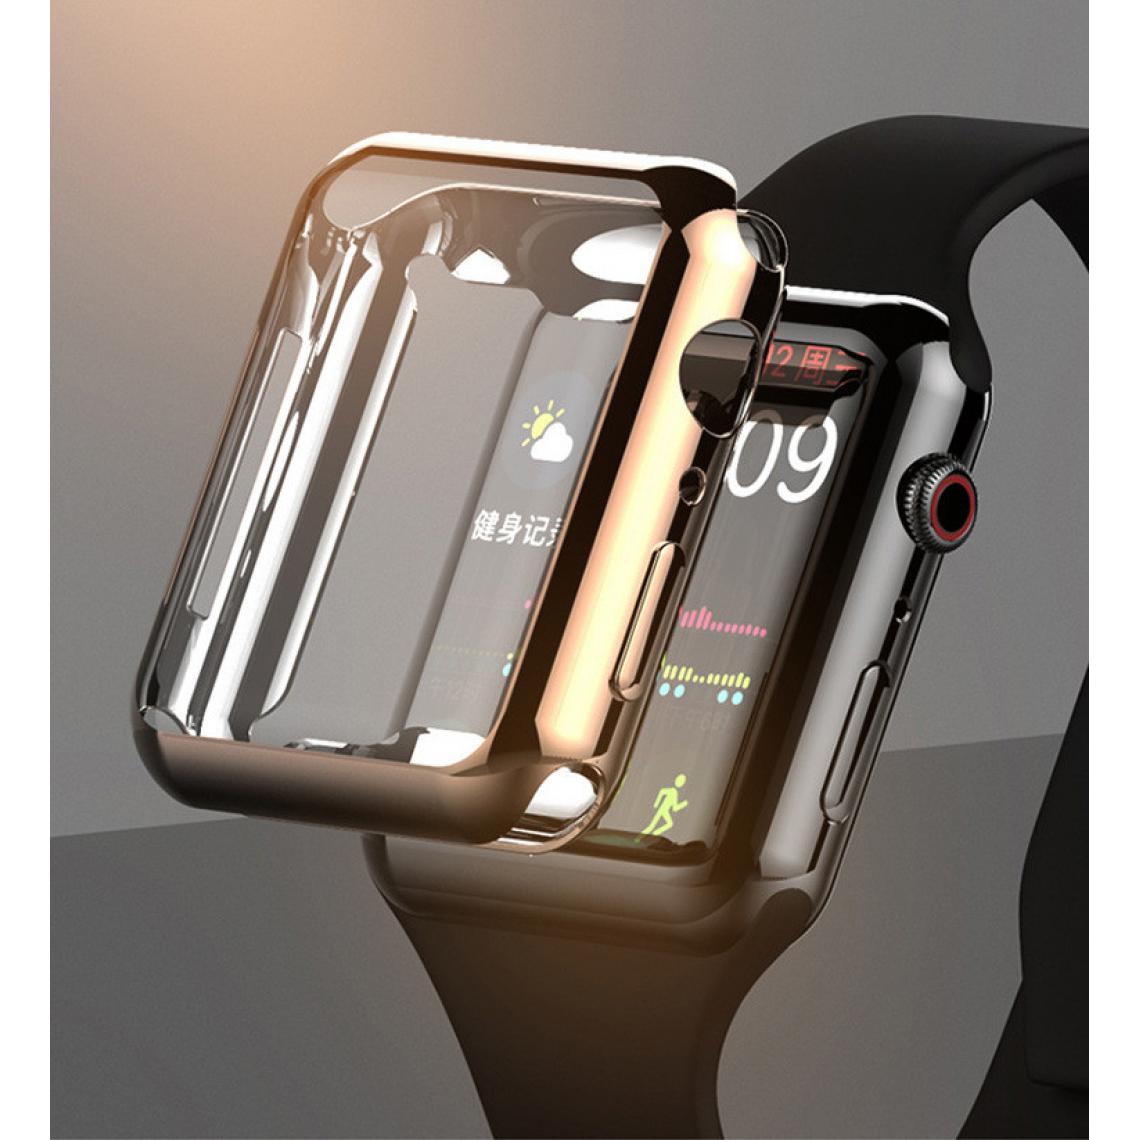 Shot - Coque Silicone 42mm pour IWATCH Serie 4 APPLE Bumper Protection Tactile (OR) - Accessoires montres connectées